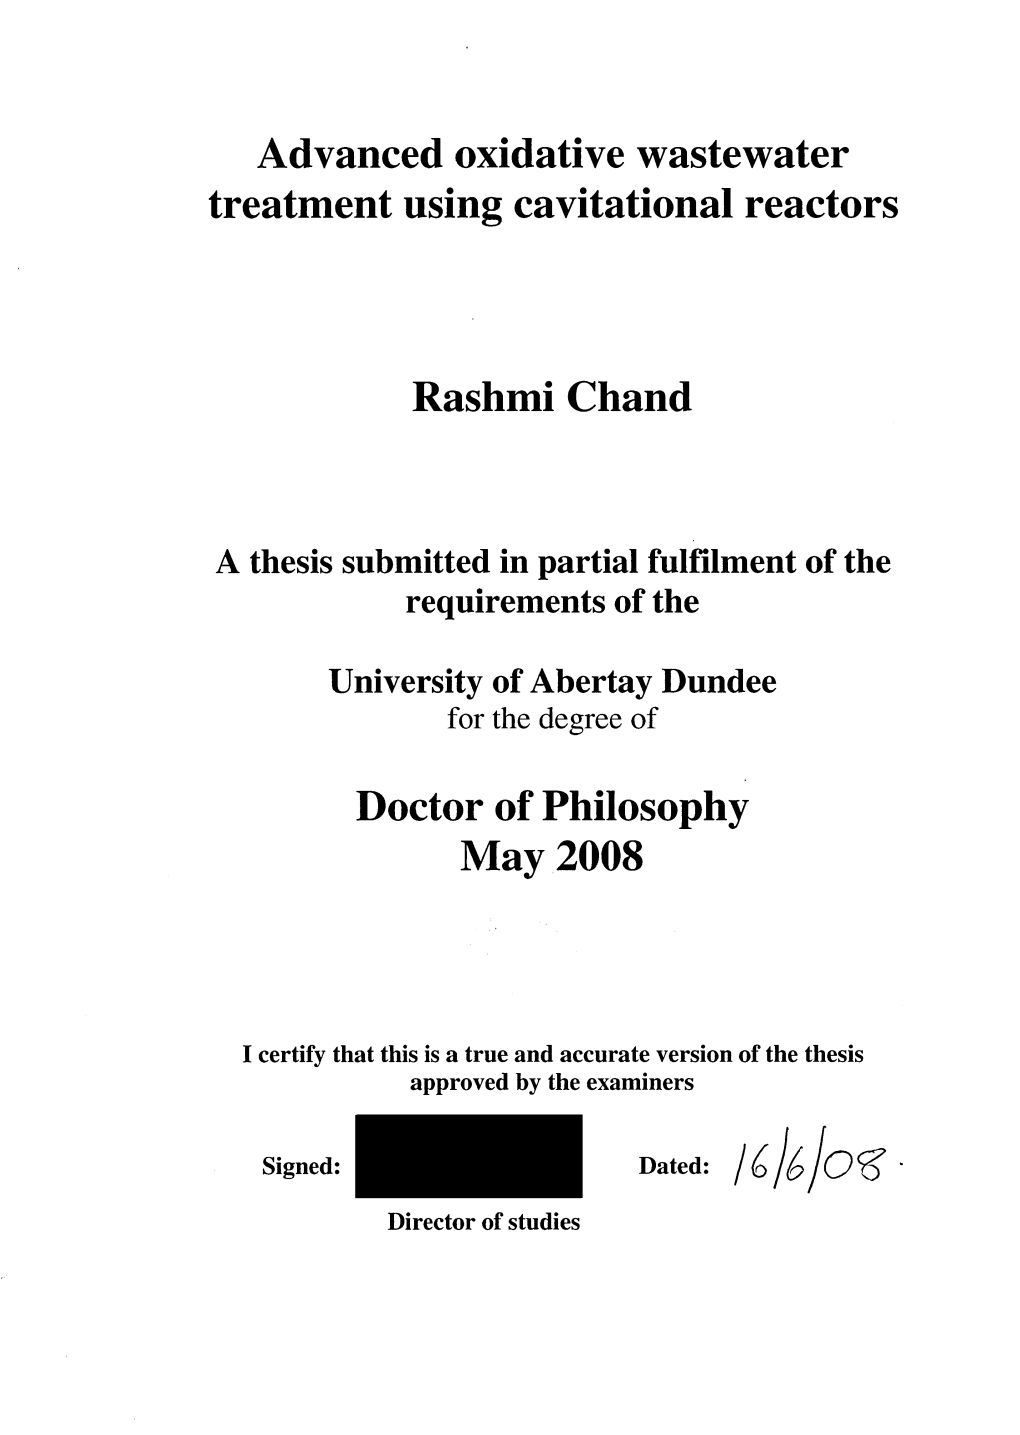 Advanced Oxidative Wastewater Treatment Using Cavitational Reactors Rashmi Chand Doctor of Philosophy May 2008